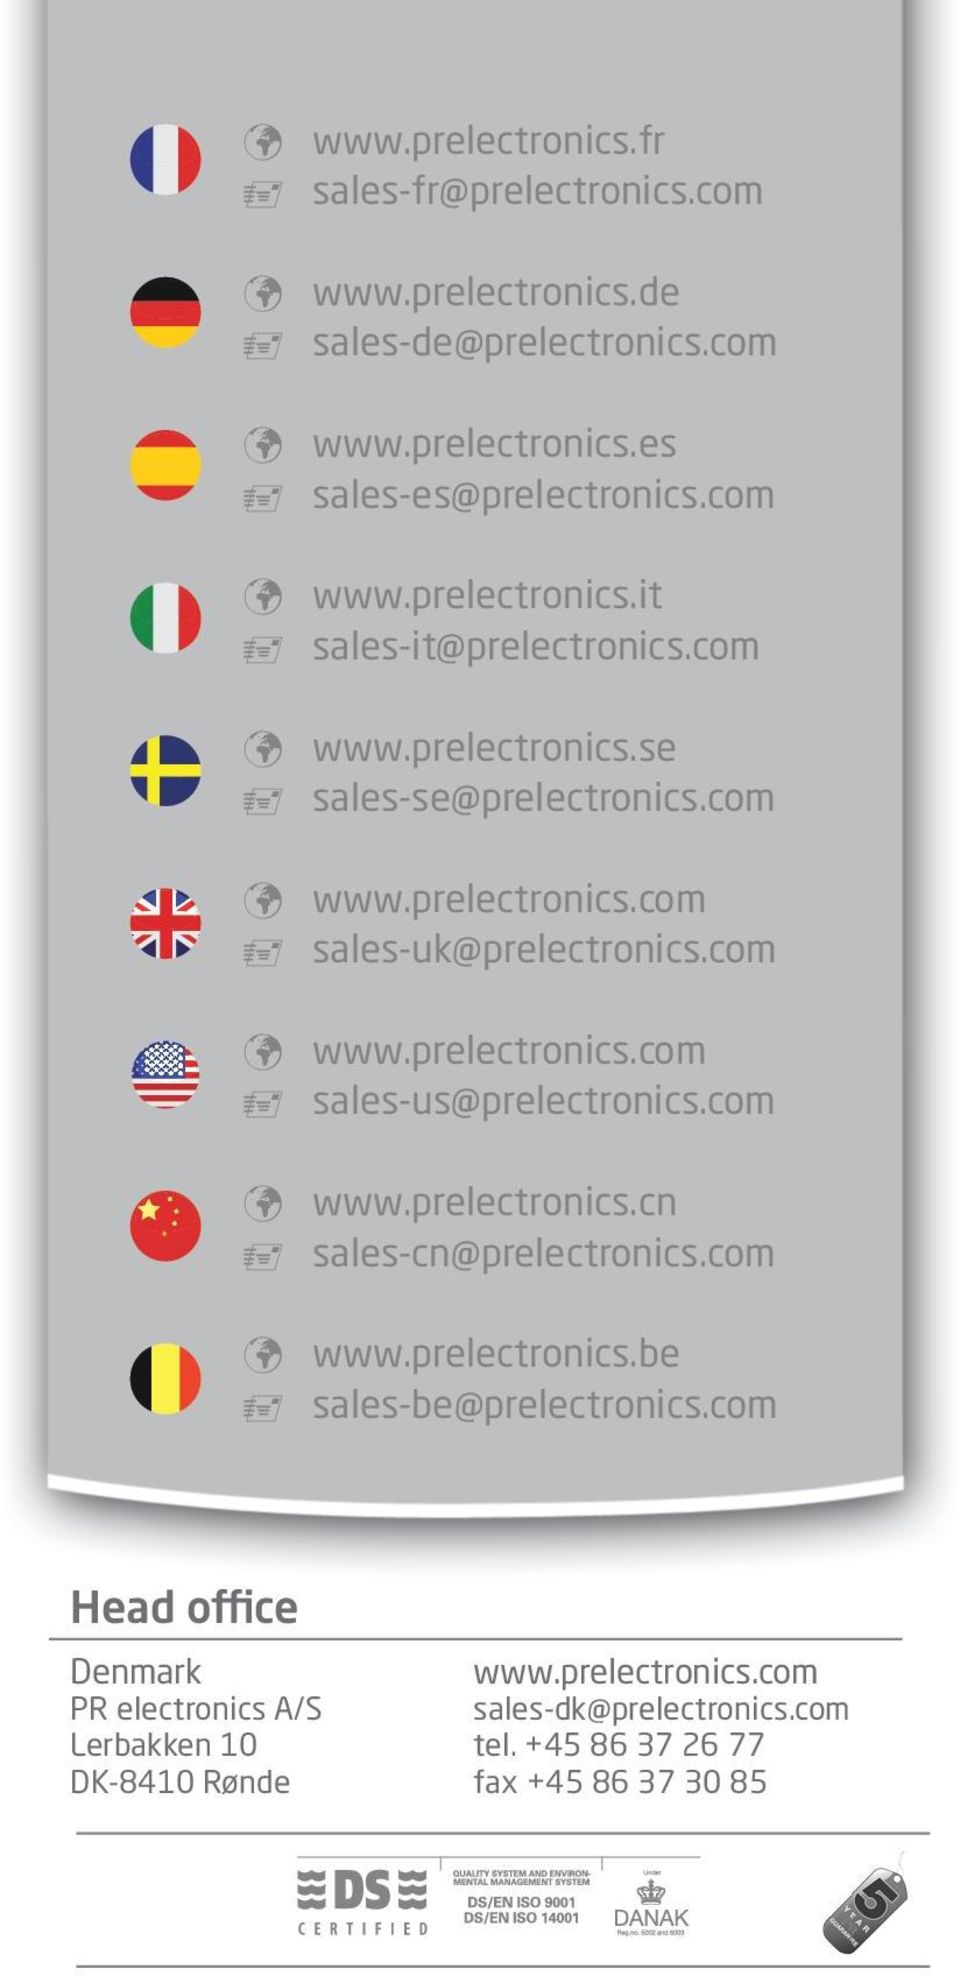 com www.prelectronics.cn sales-cn@prelectronics.com www.prelectronics.be sales-be@prelectronics.com Head office Denmark www.prelectronics.com PR electronics A/S sales-dk@prelectronics.